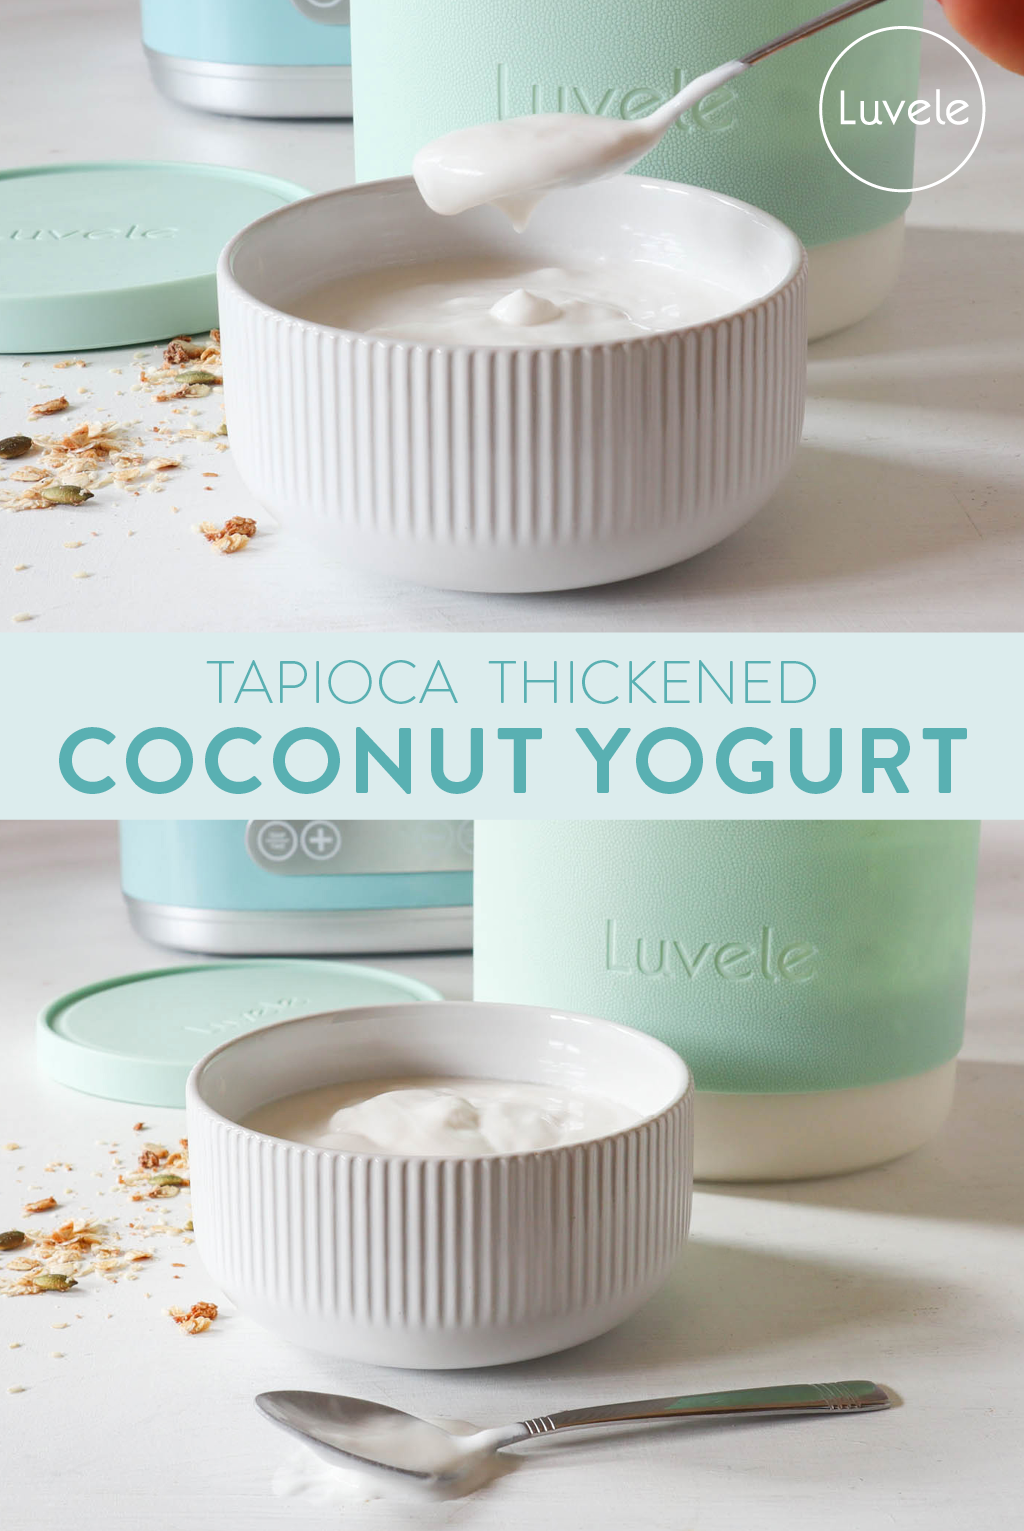 Tapioca thickened coconut yogurt